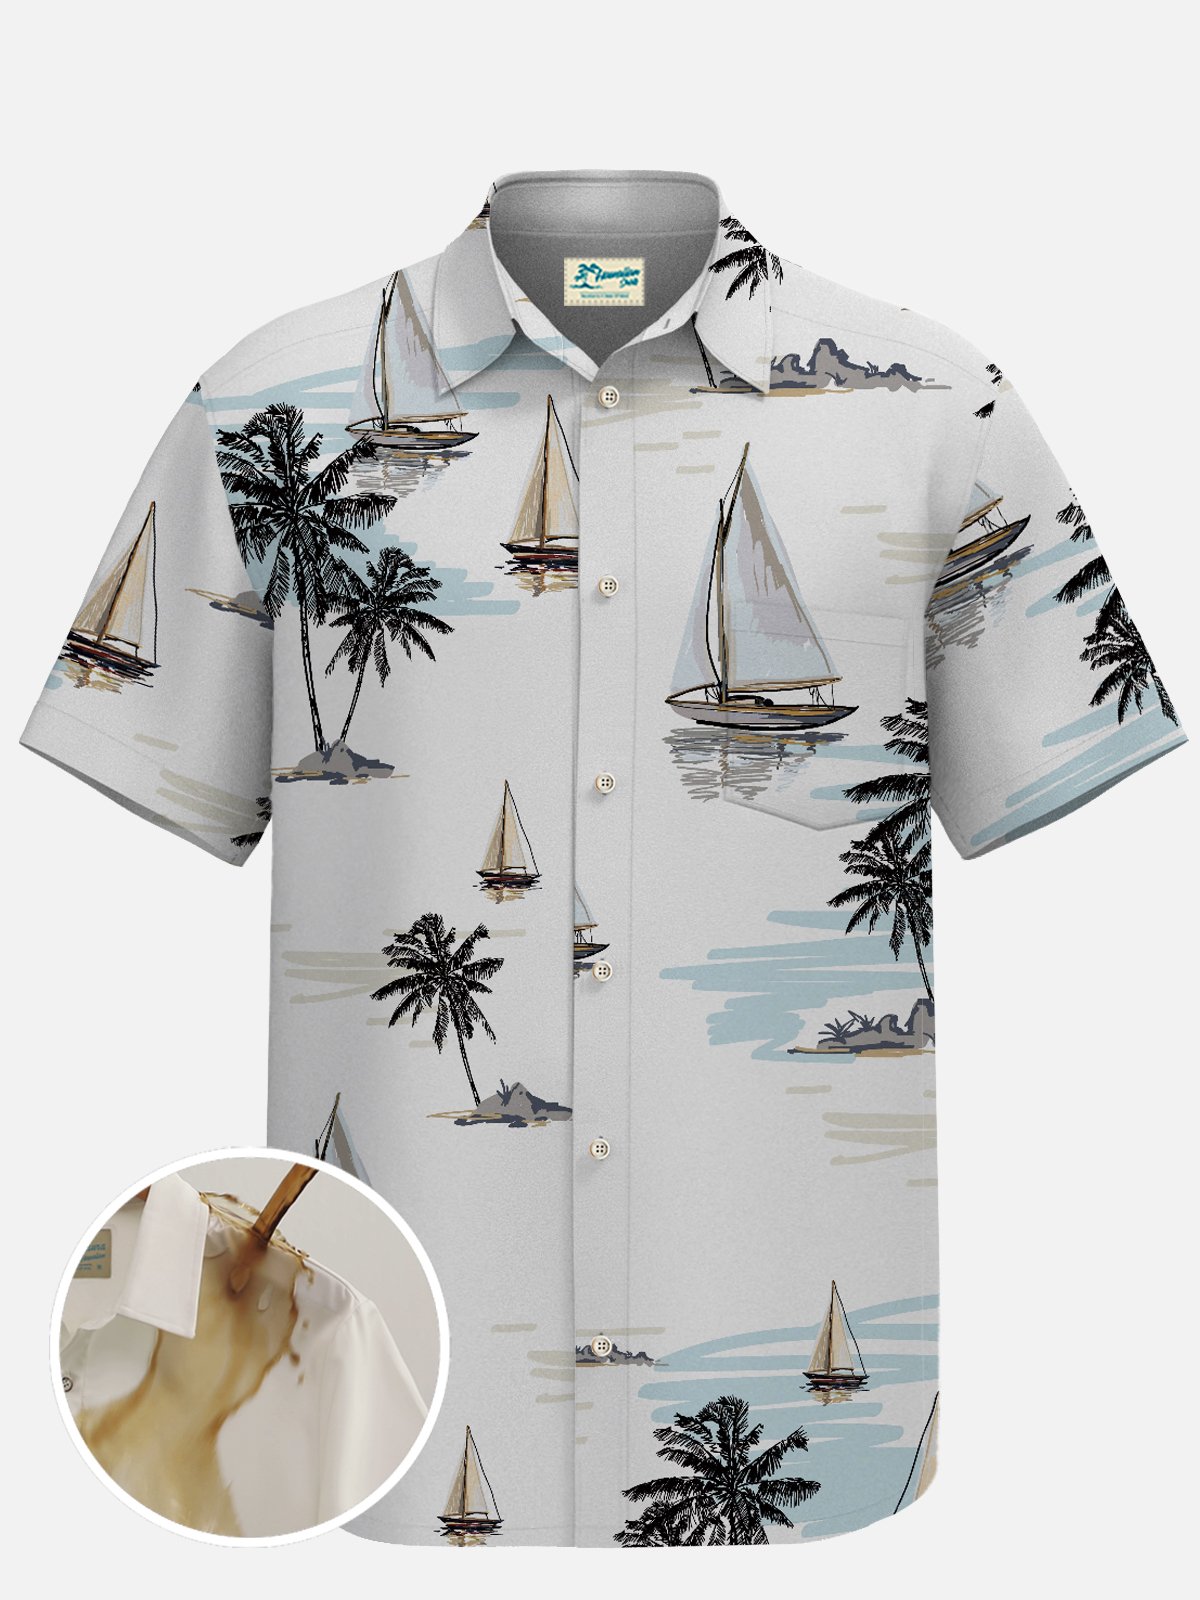 Royaura Waterproof Sailboat Holiday Beach Short Sleeve Hawaiian Shirts  Coconut Tree Stain-Resistant Lightweight